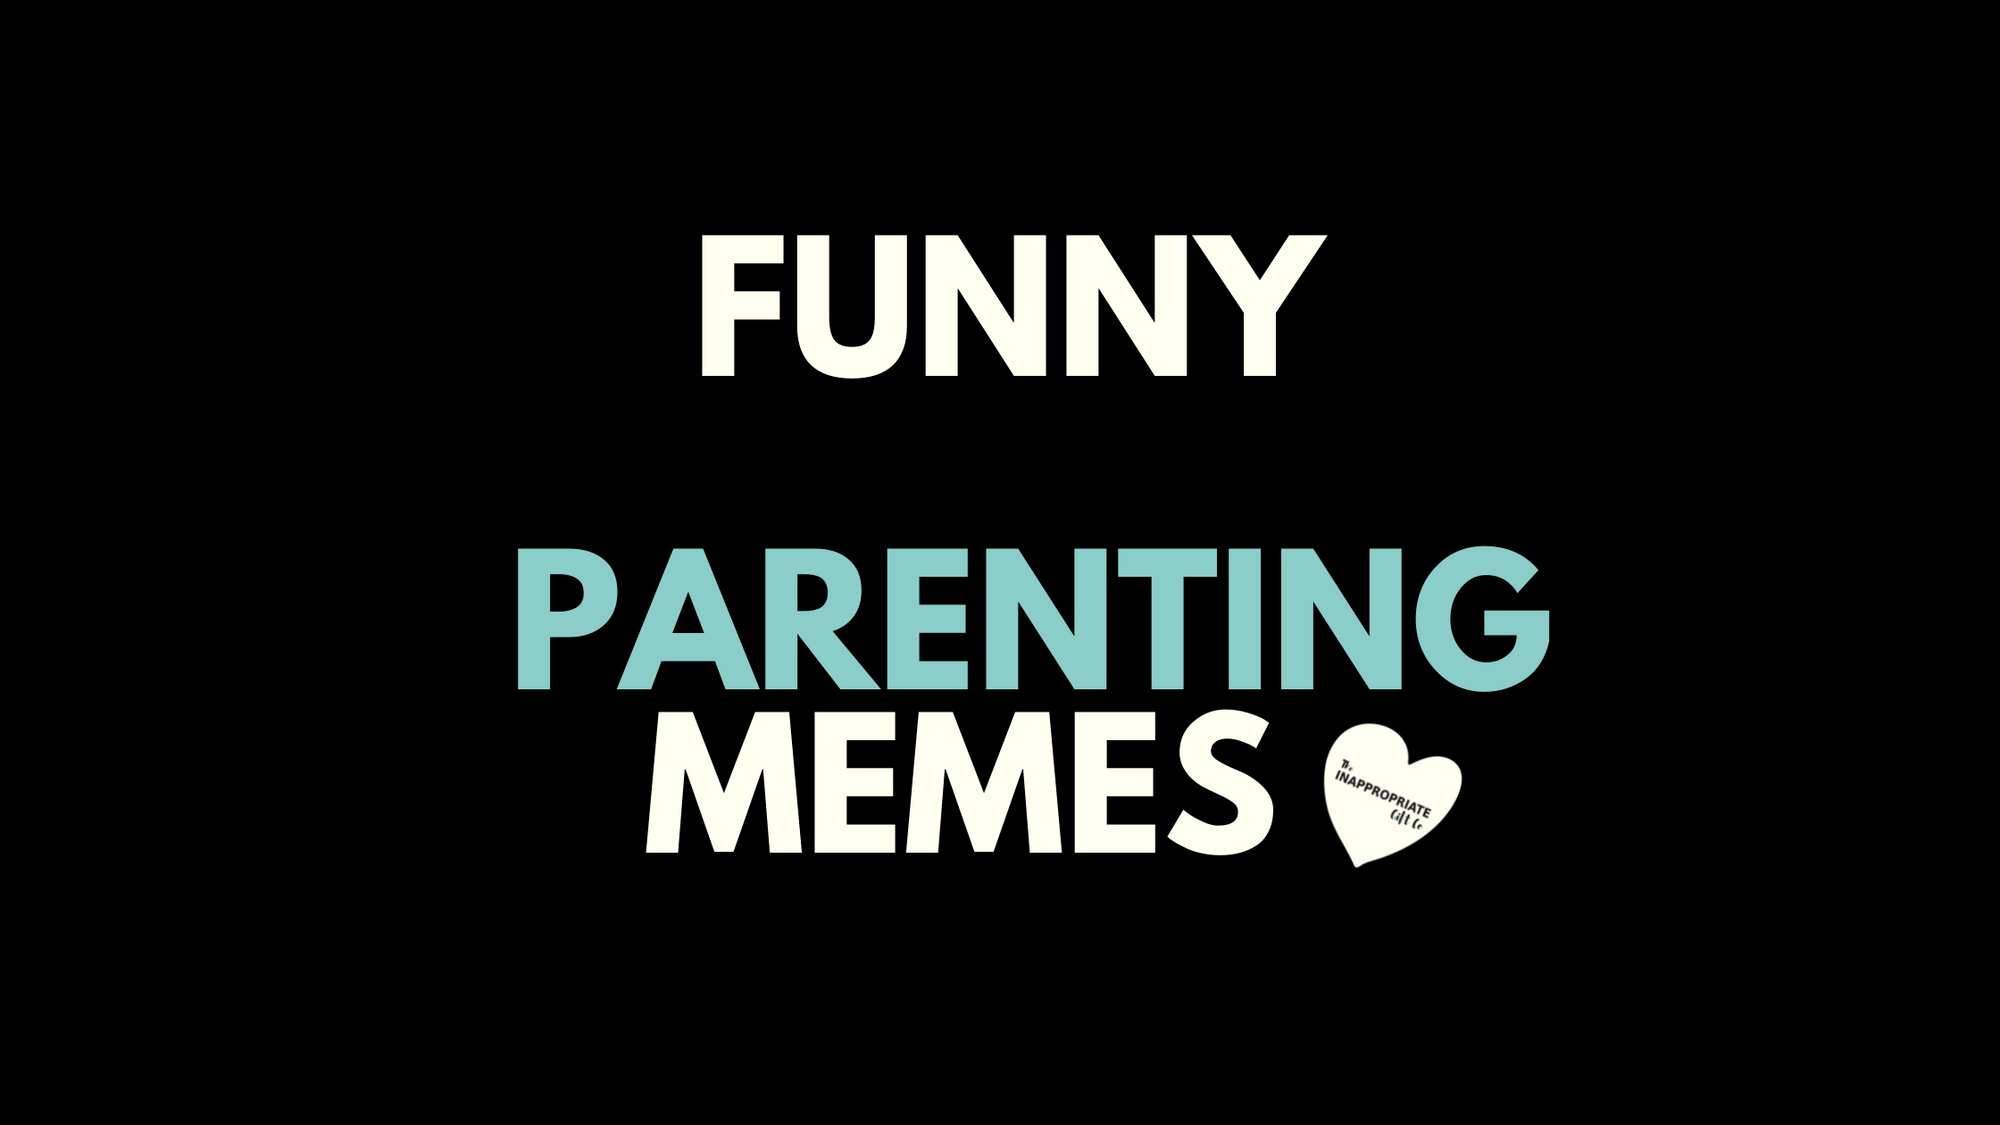 Our favourite parenting memes